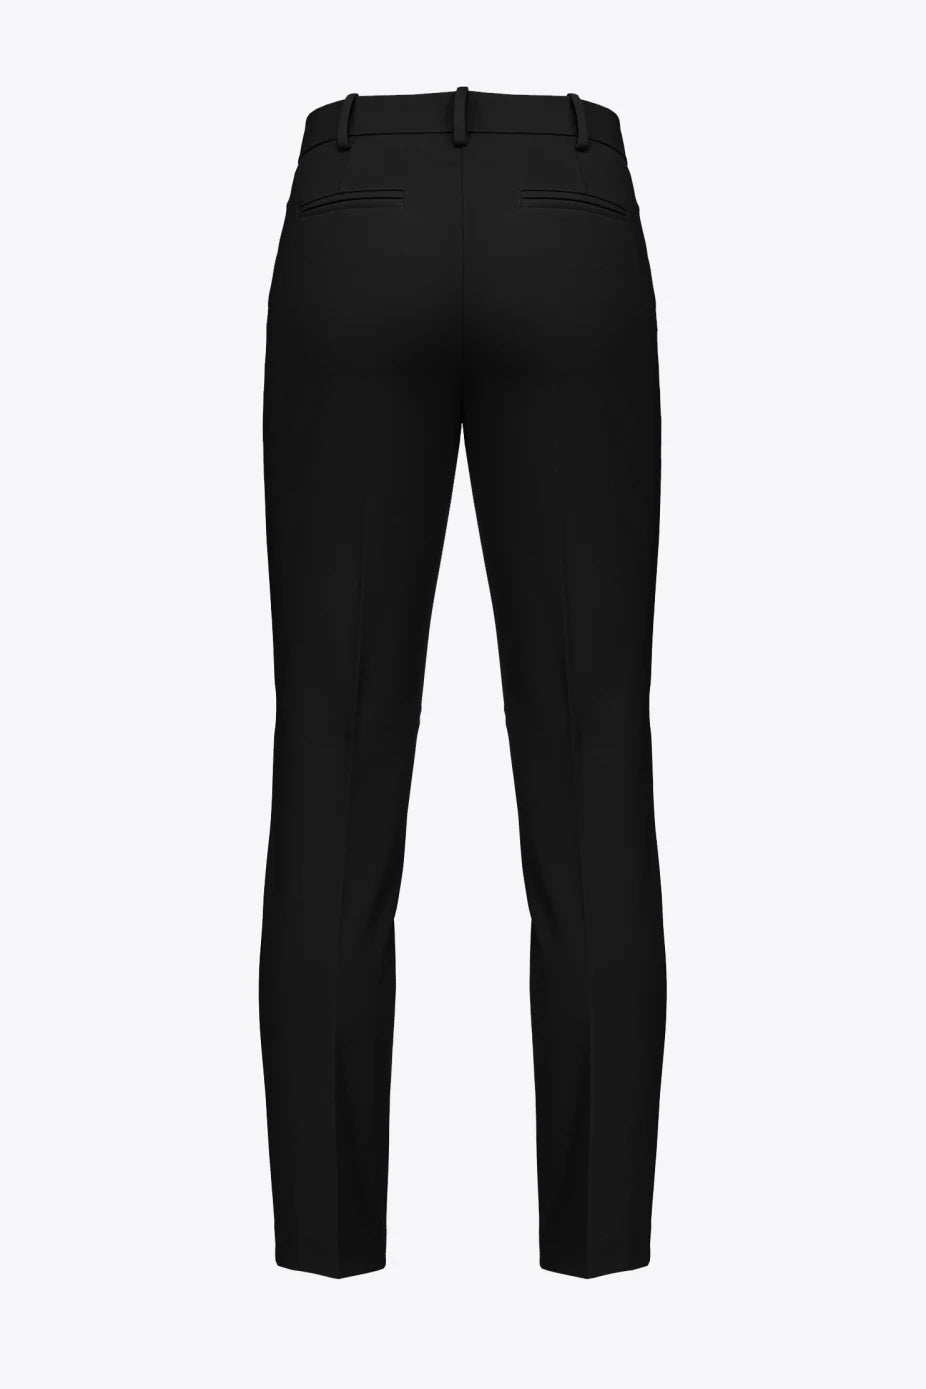 Pantalone Punto Stoffa Pinko / Nero - Ideal Moda